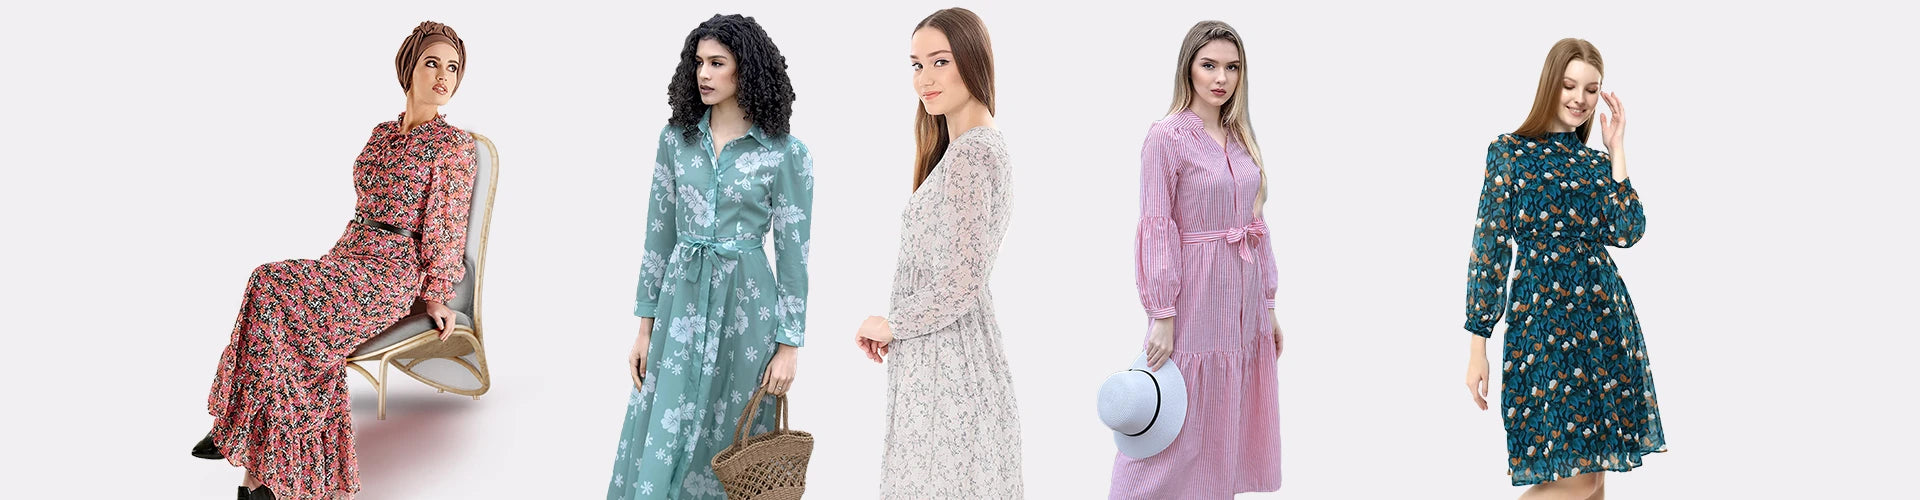 Floral Dresses vs. Printed Dresses